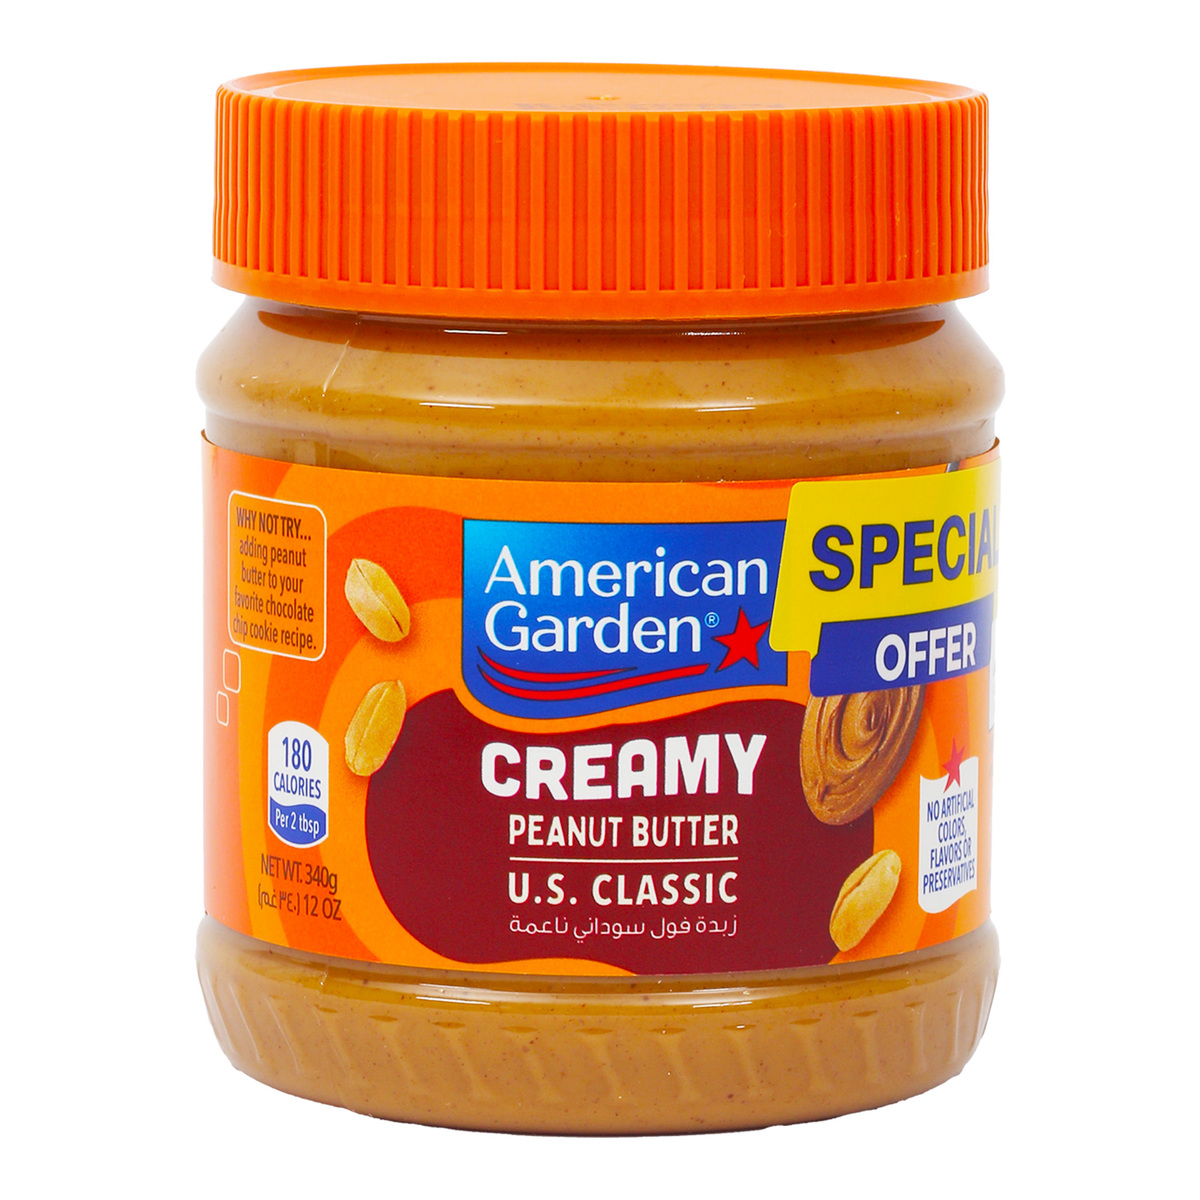 American Garden Peanut Butter Creamy Value Pack 340 g